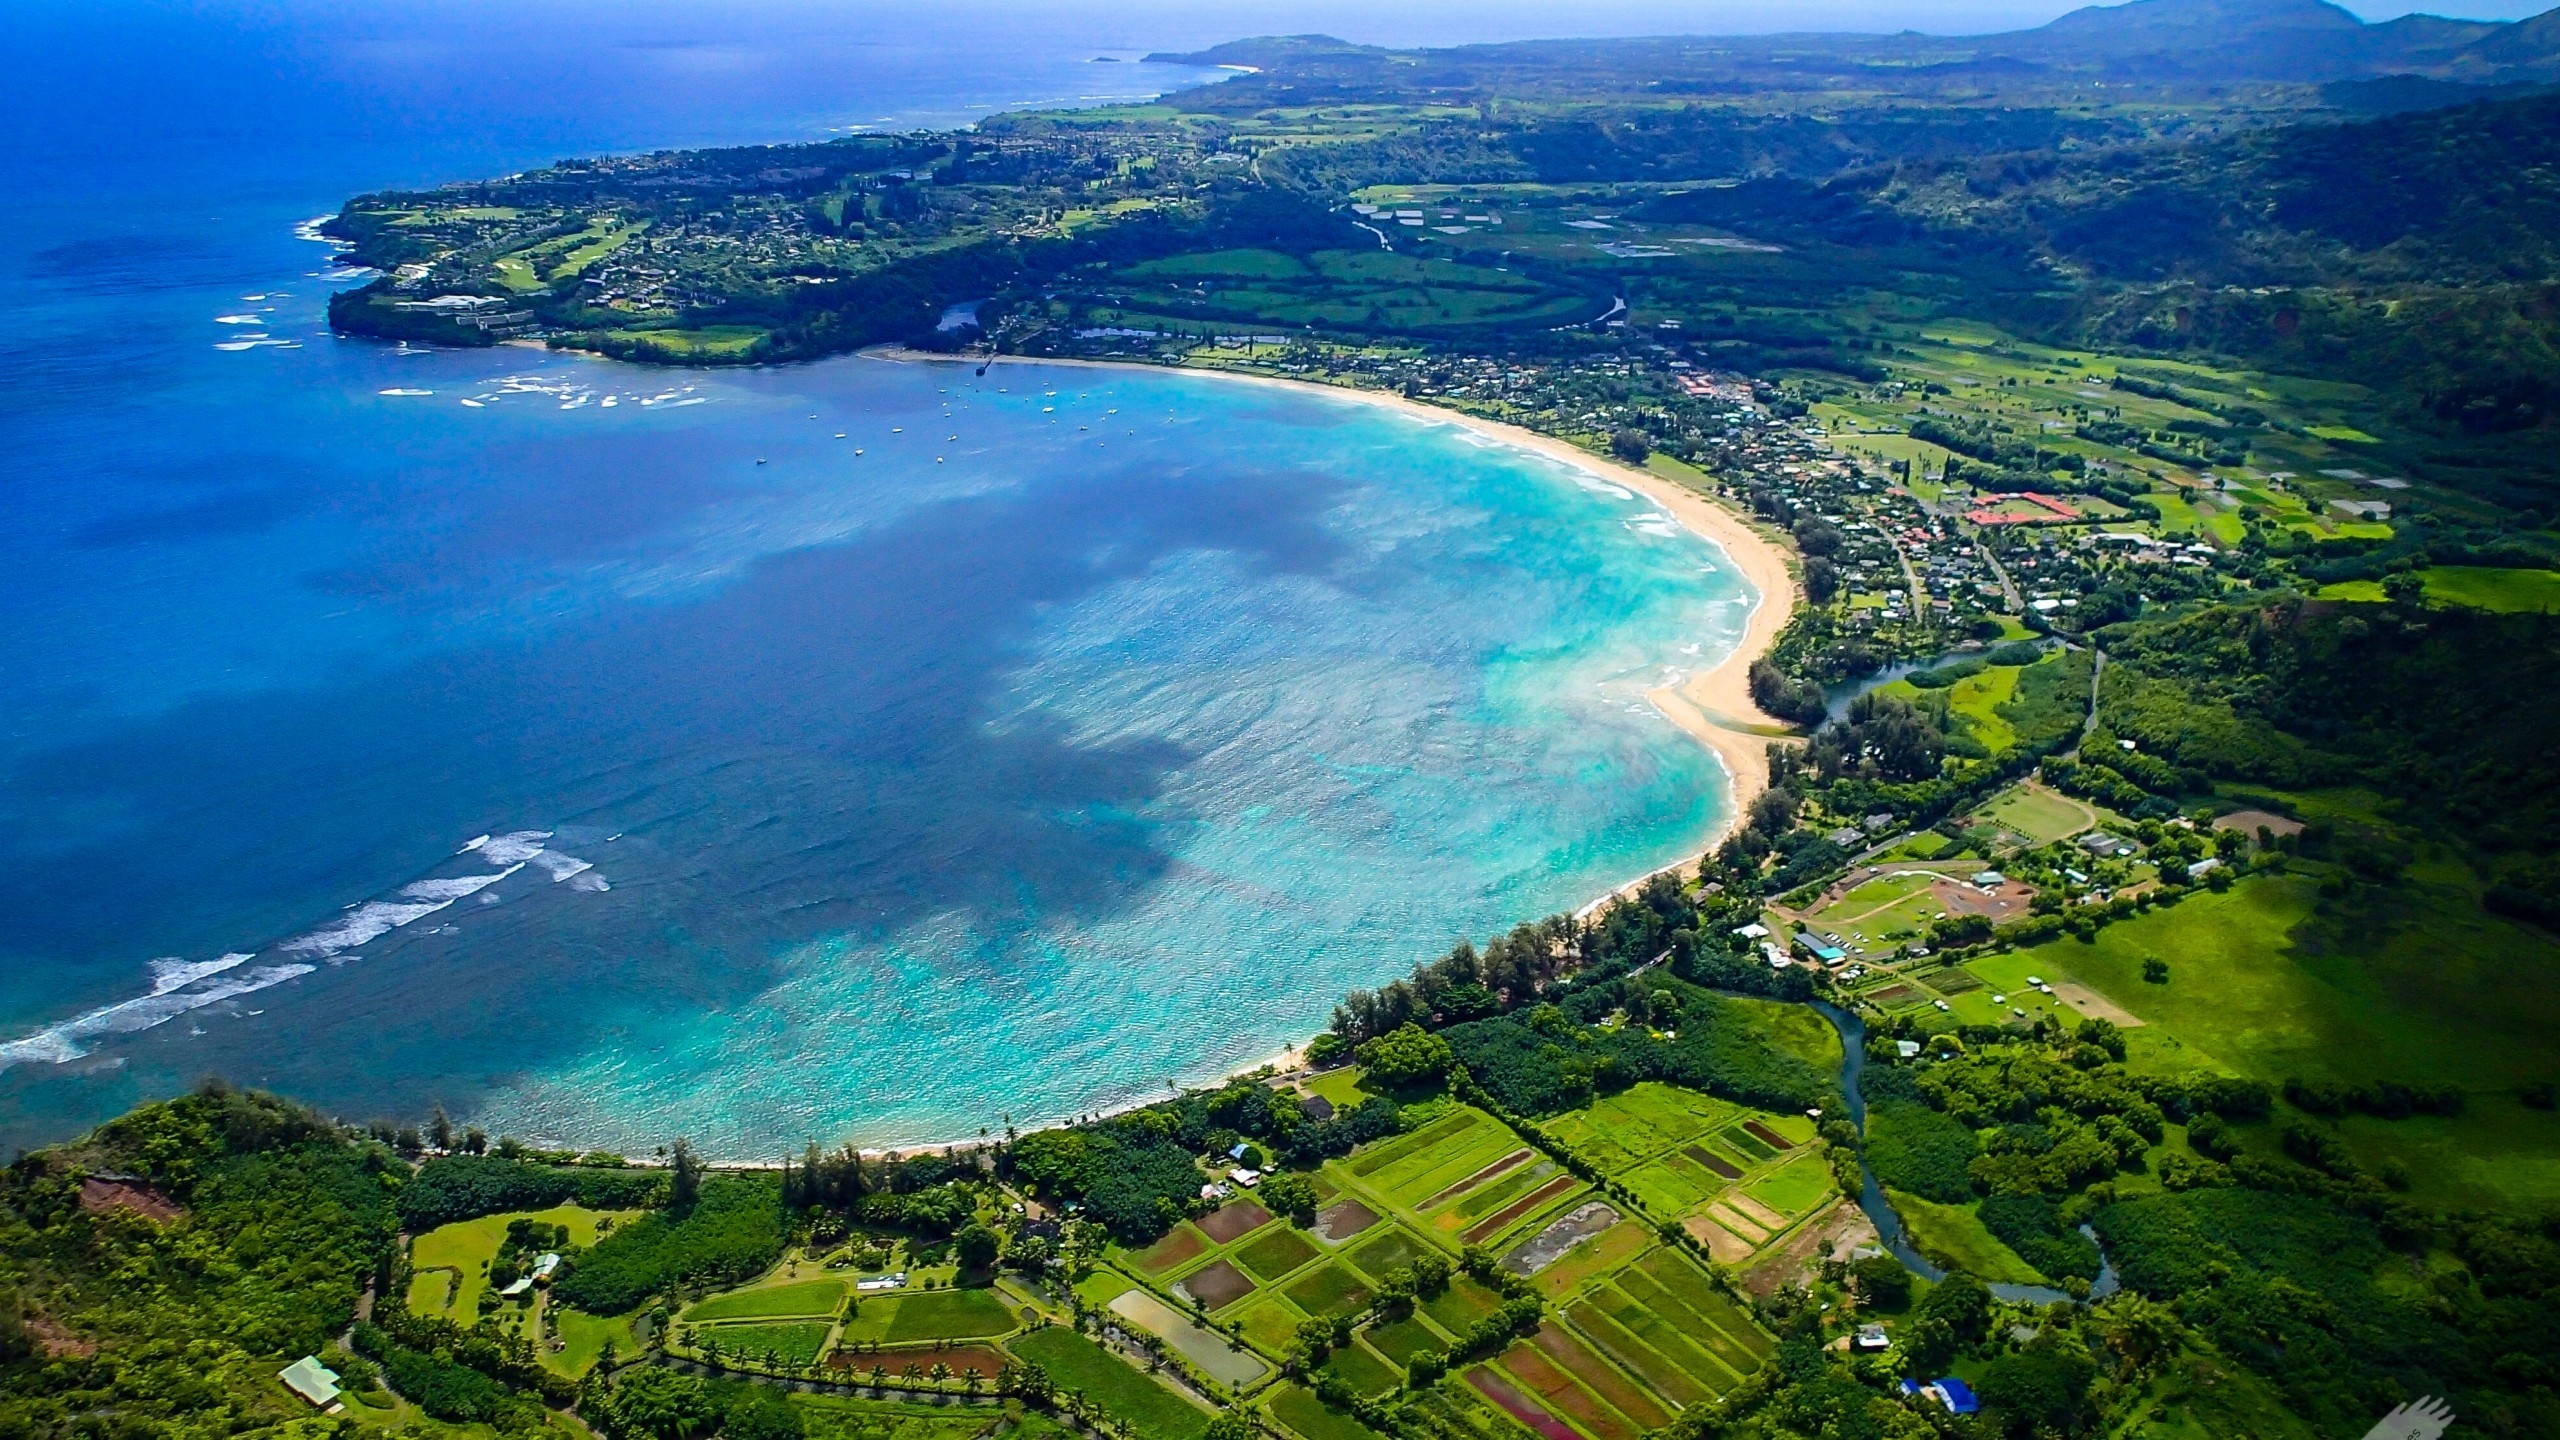 Kauai Island Hawaii for 2560x1440 HDTV resolution